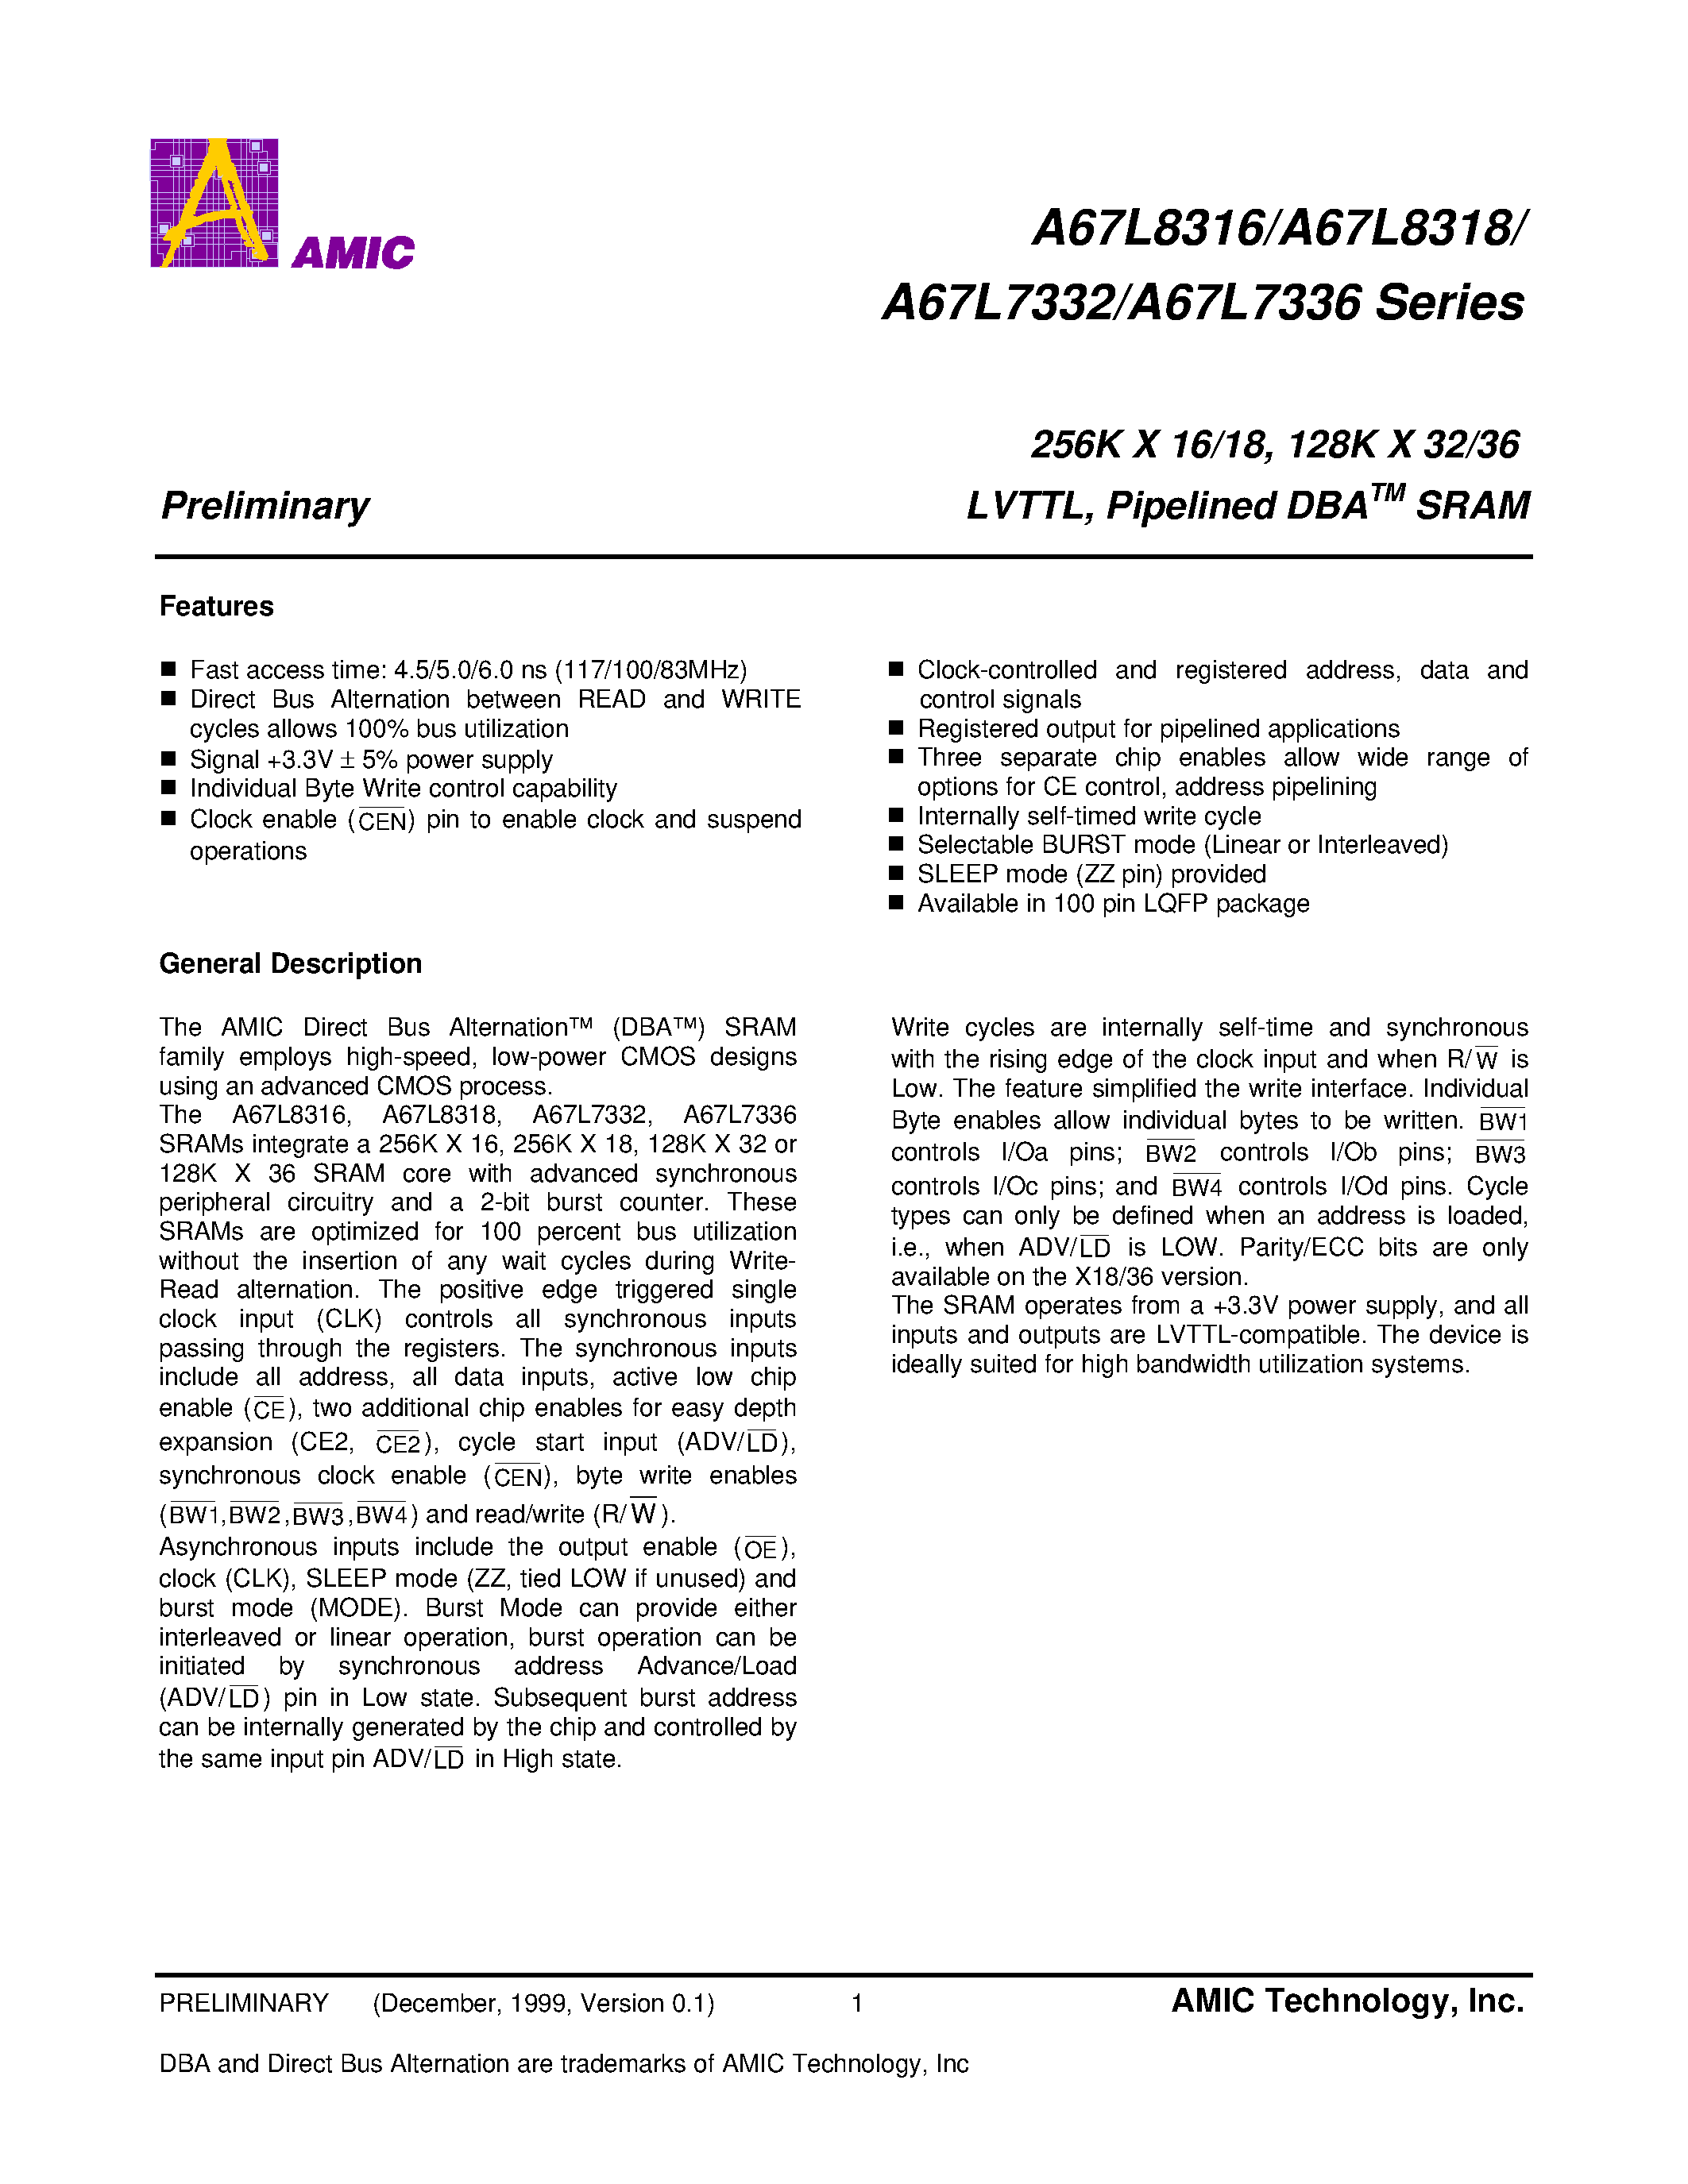 Datasheet A67L8318E-6 - 256K X 16/18/ 128K X 32/36 LVTTL/ Pipelined DBA SRAM page 2